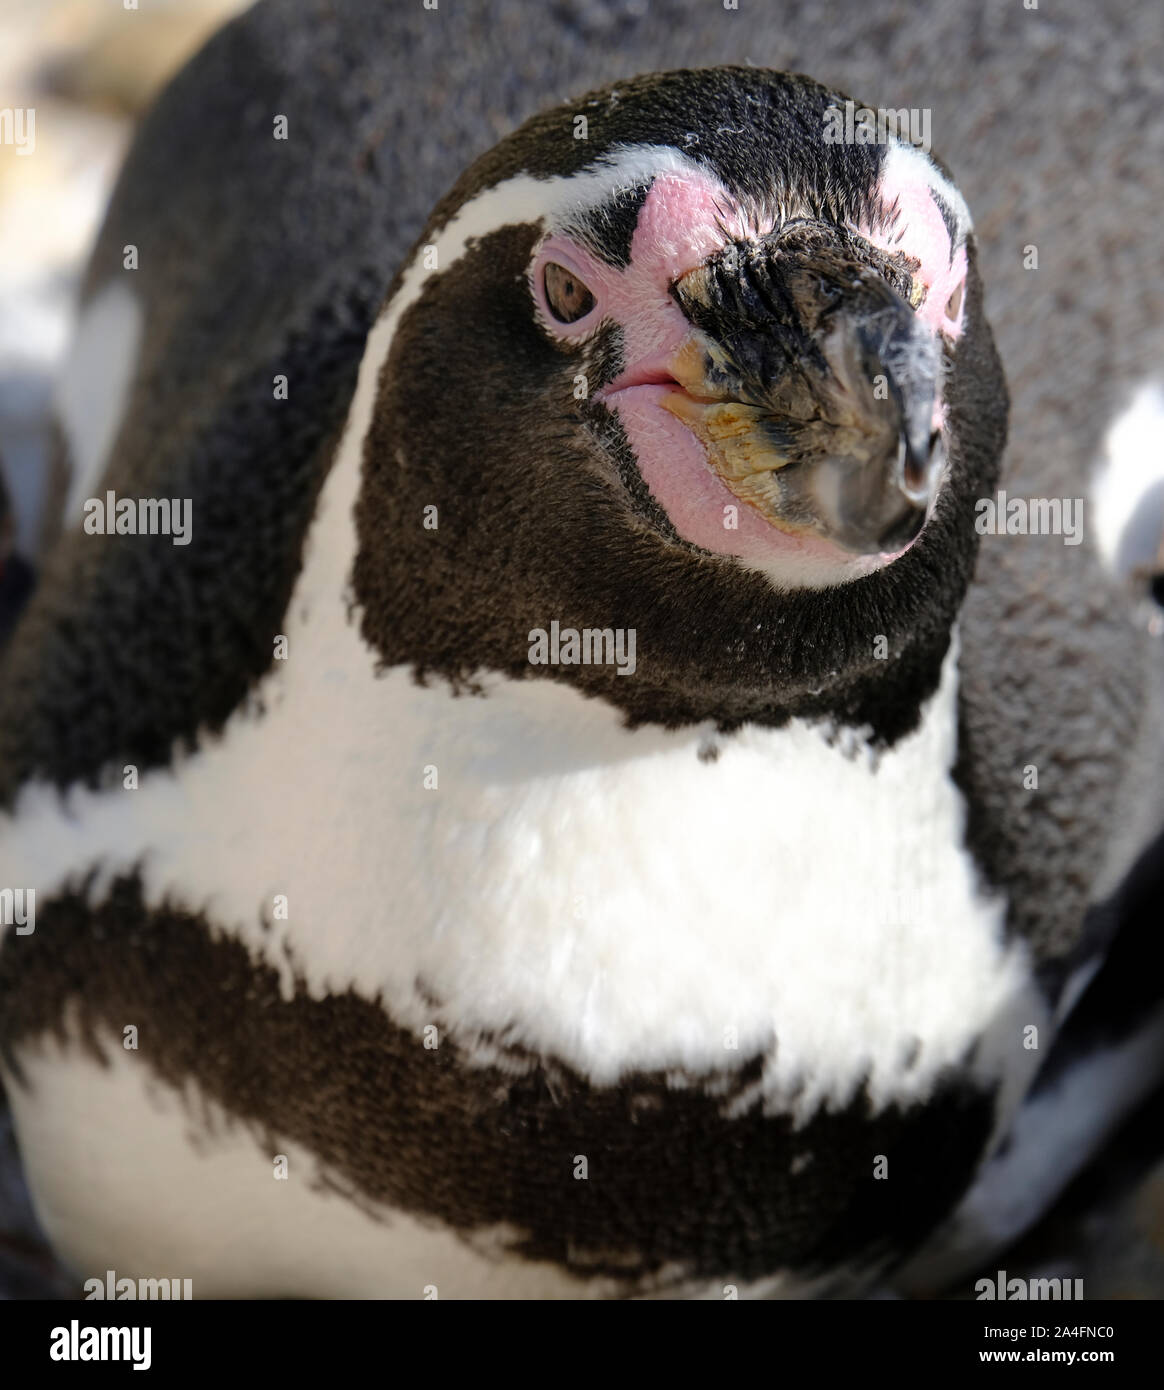 Hampshire, England, UK. Portrait of a Humboldt Penguin showing its large black bill and pink fleshy base. Stock Photo